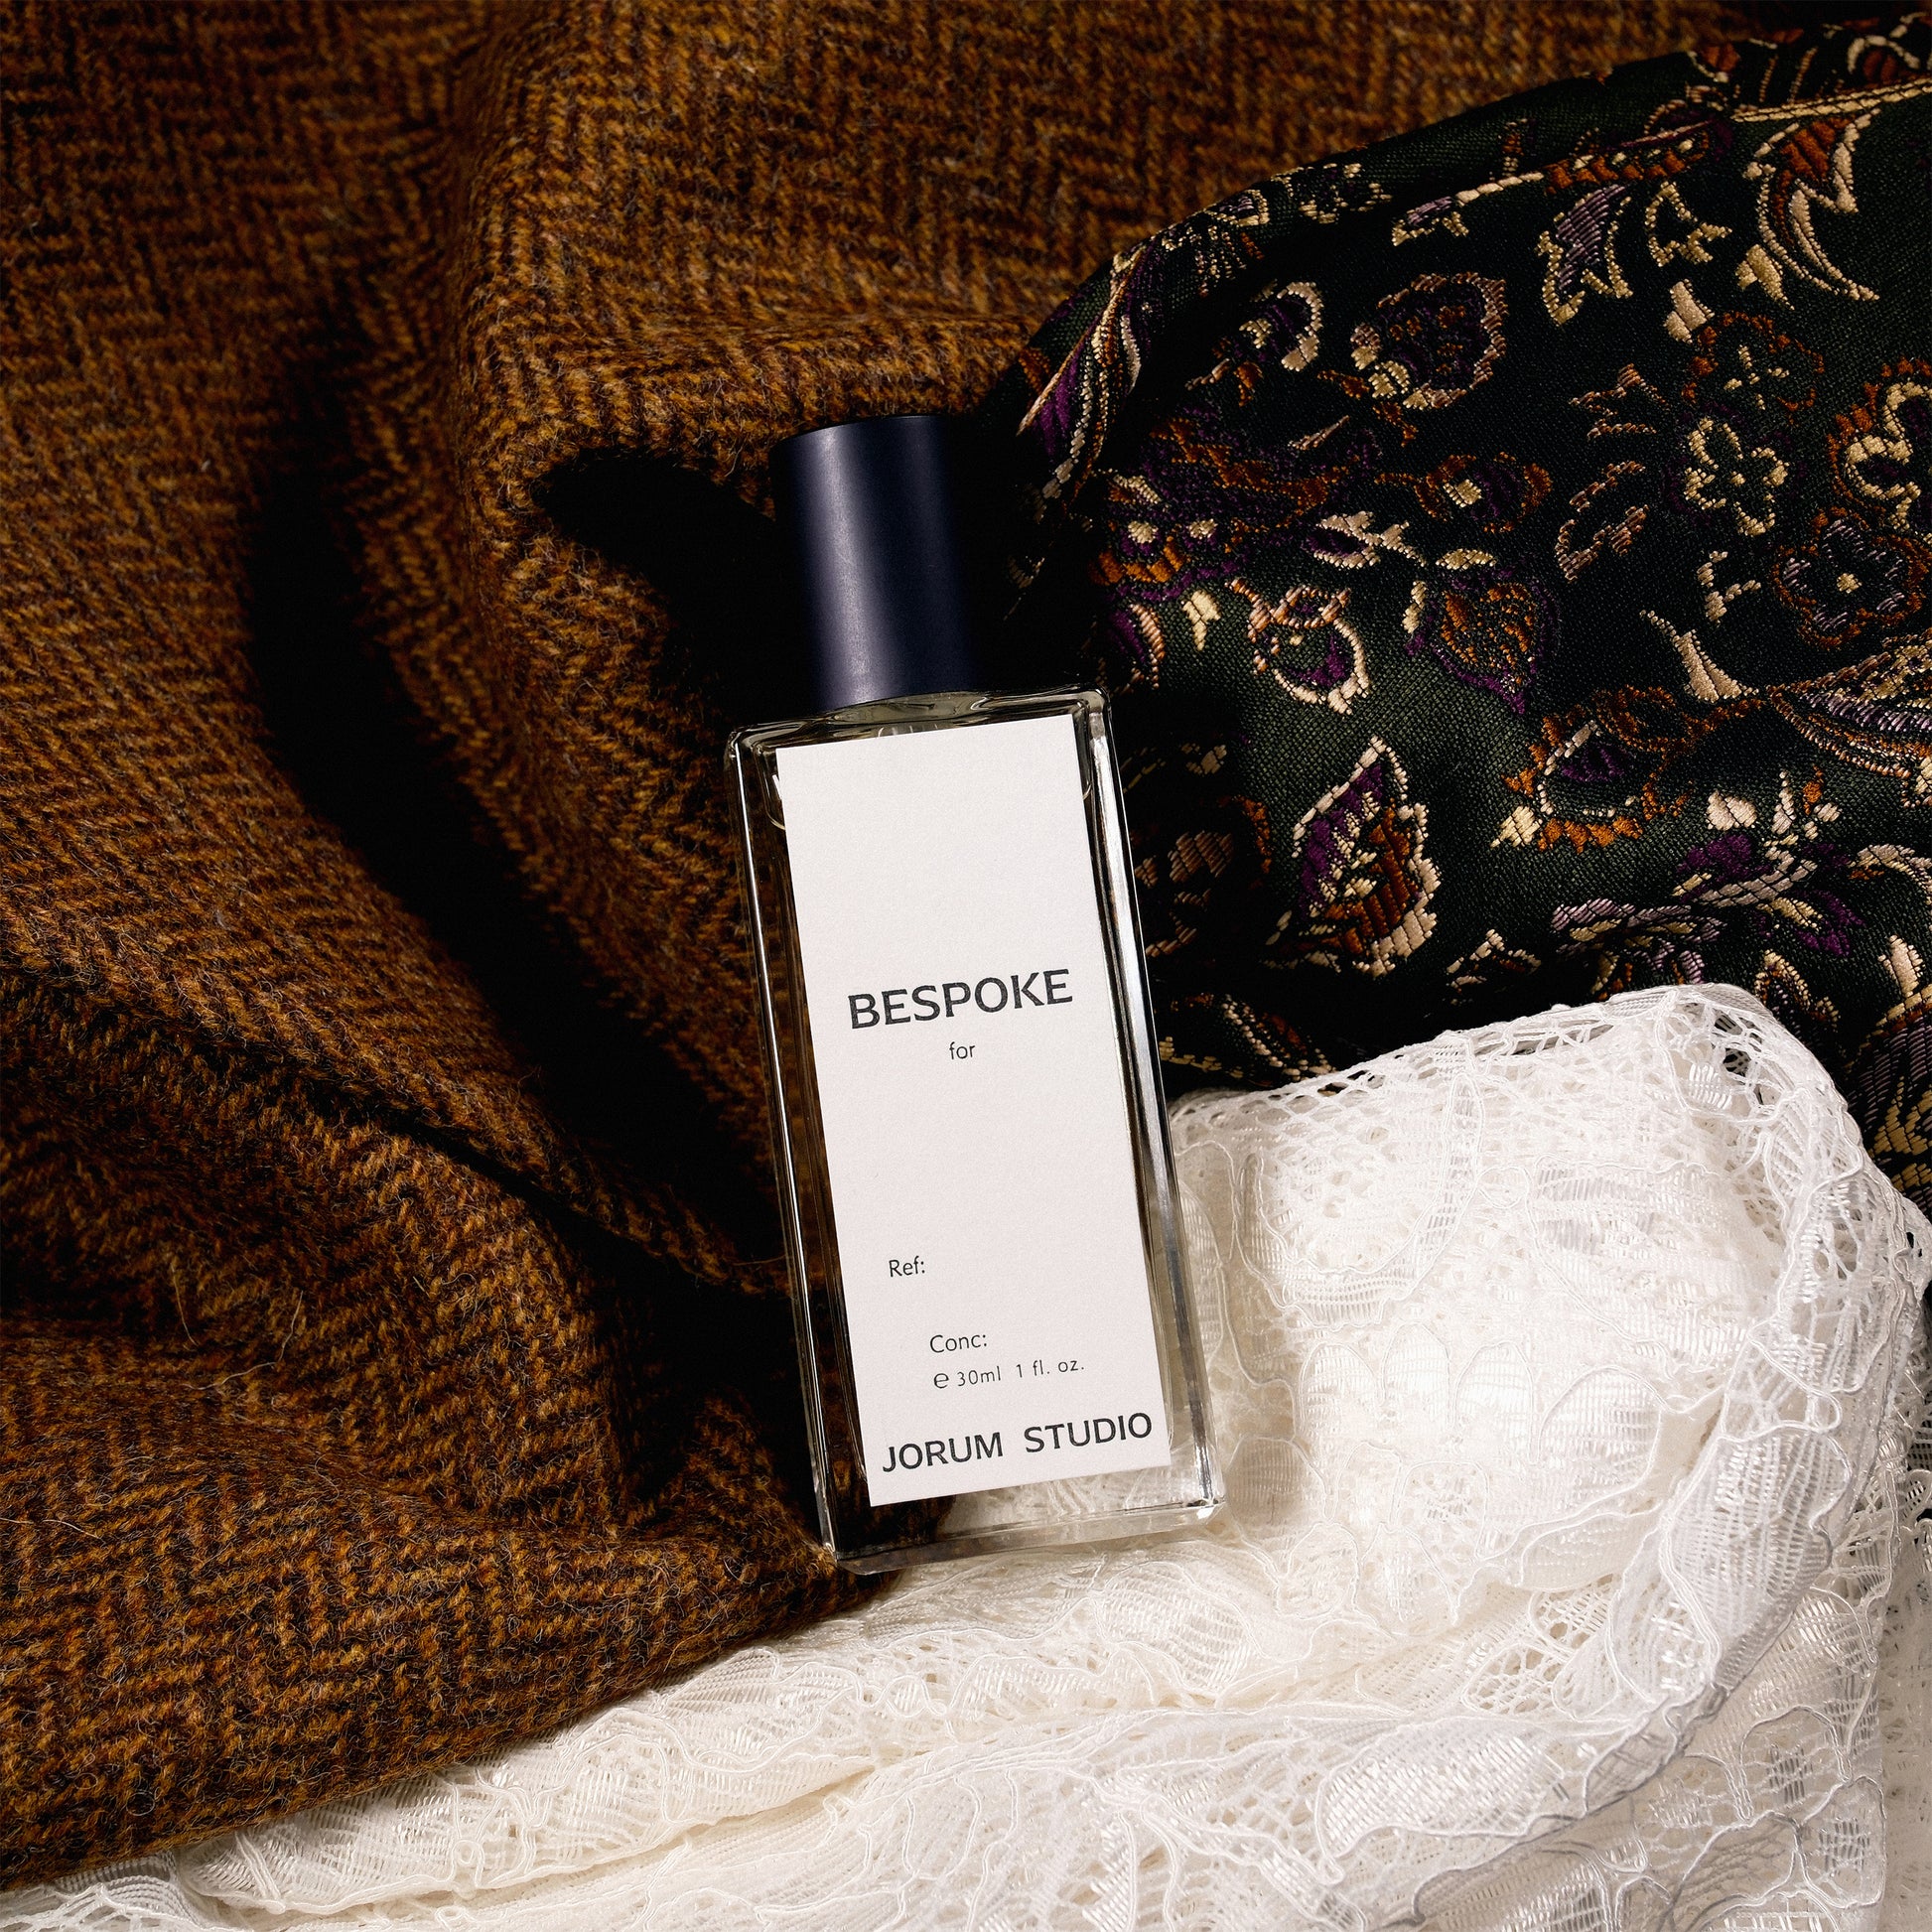 Bespoke Perfume from Jorum Studio sitting on rich fabrics of tweed, silk and lace